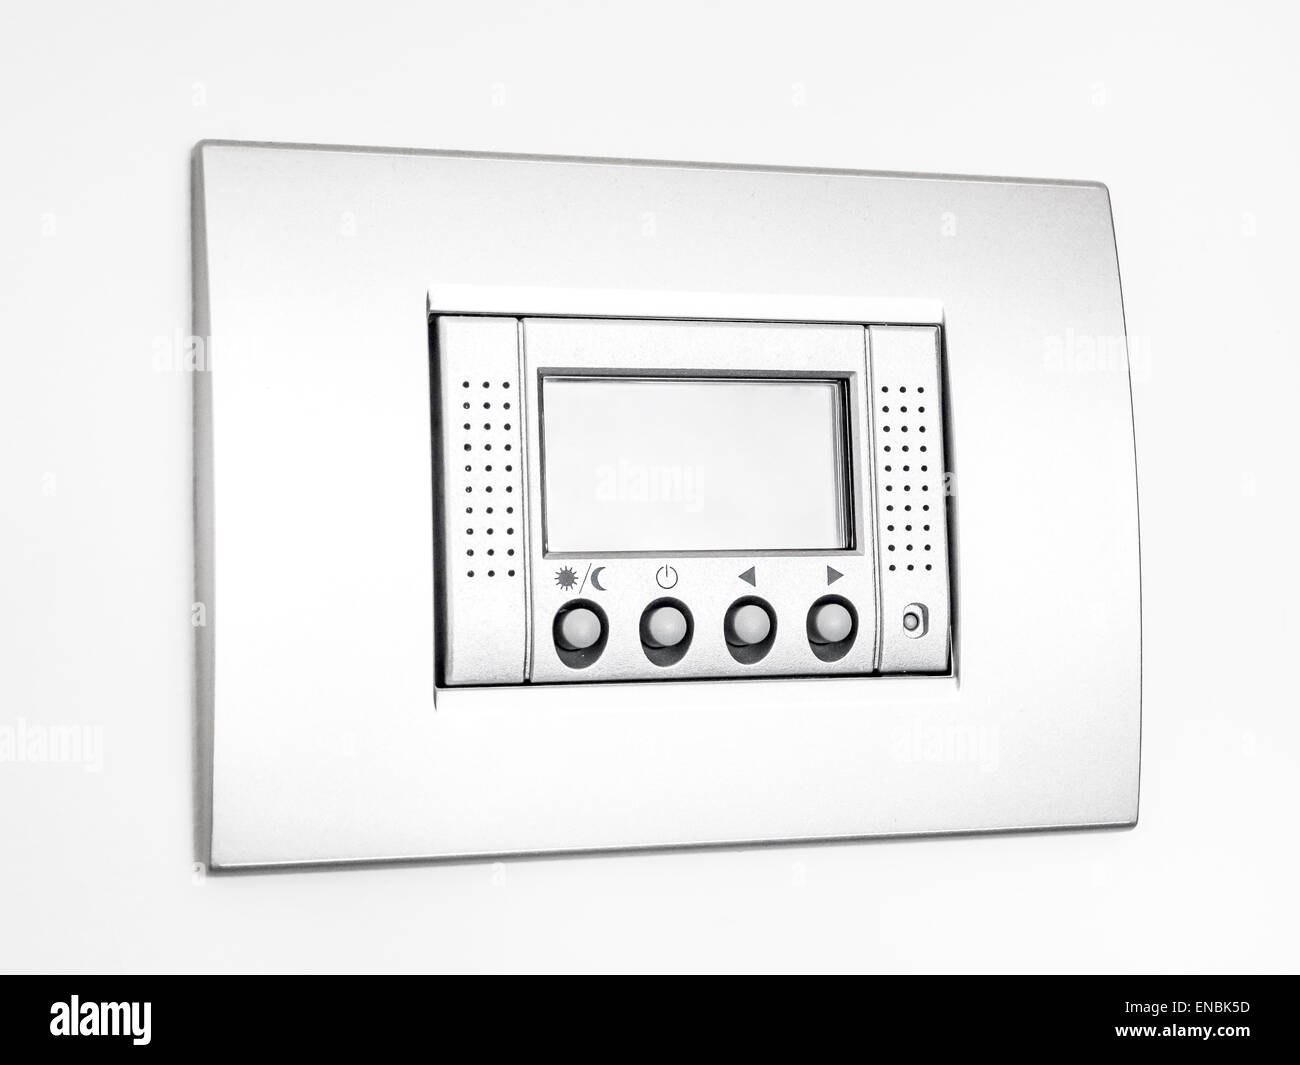 Digitale termostato vuota su sfondo bianco Foto Stock